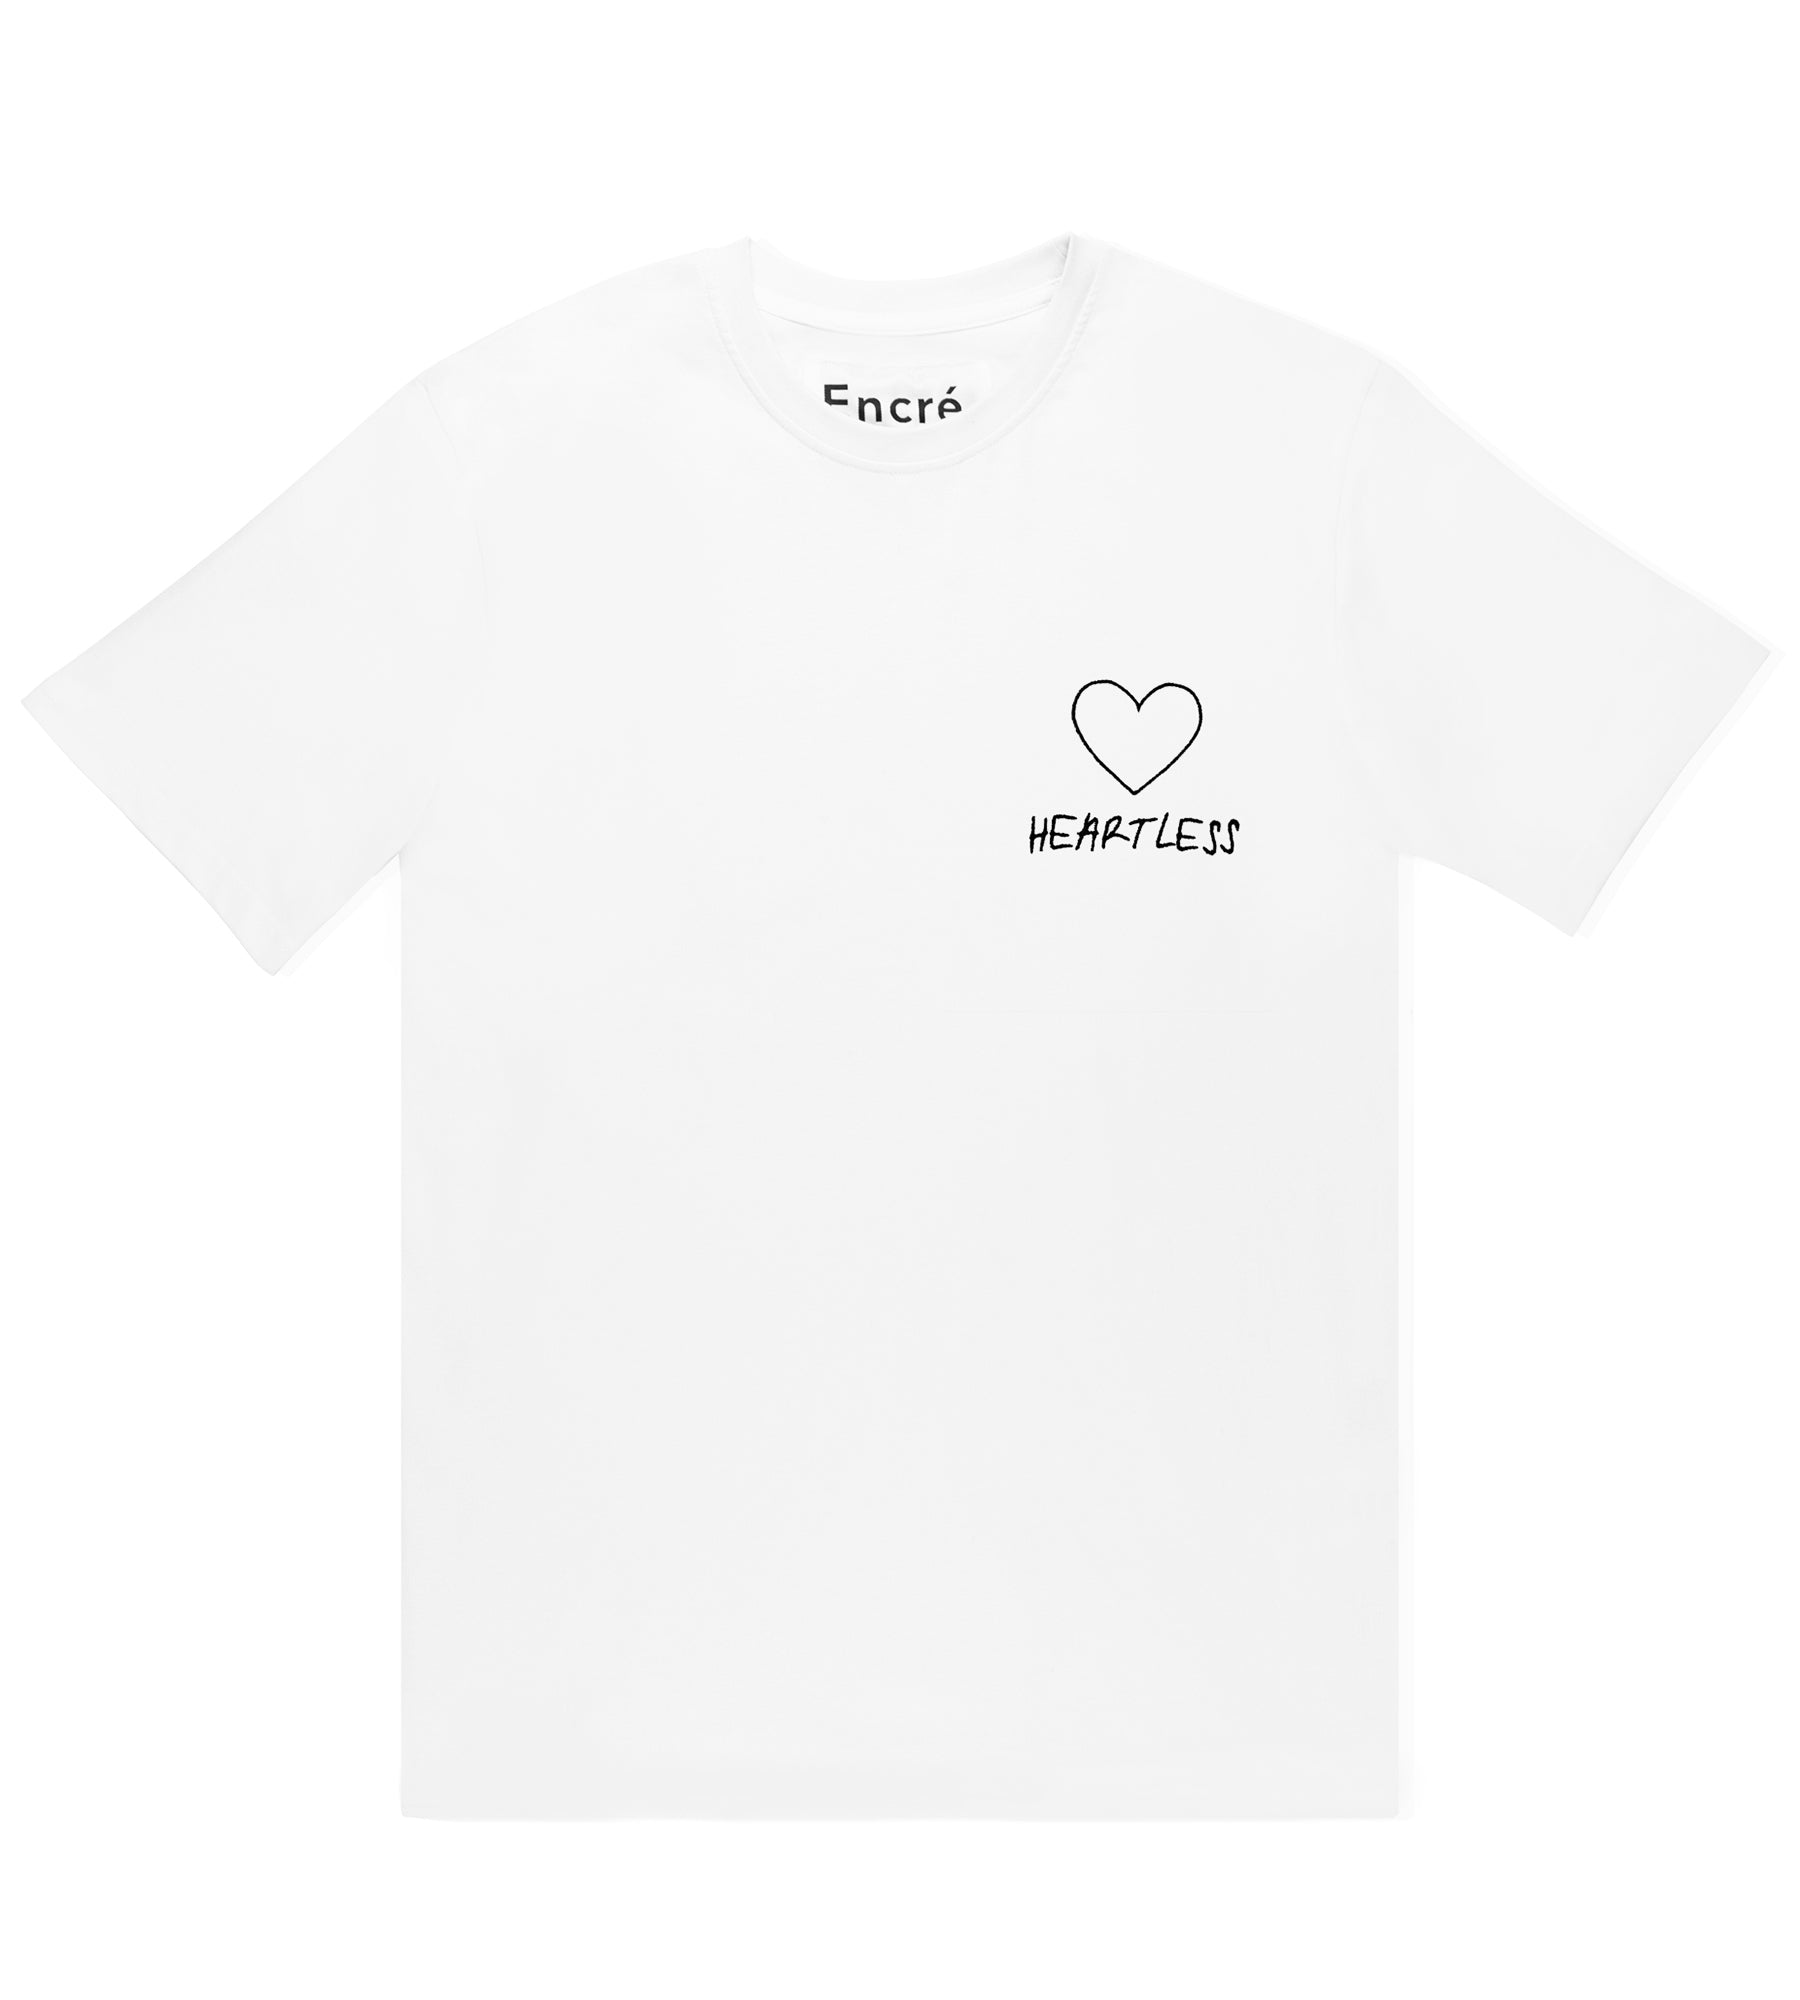 Encré T-shirt "heartless" - White